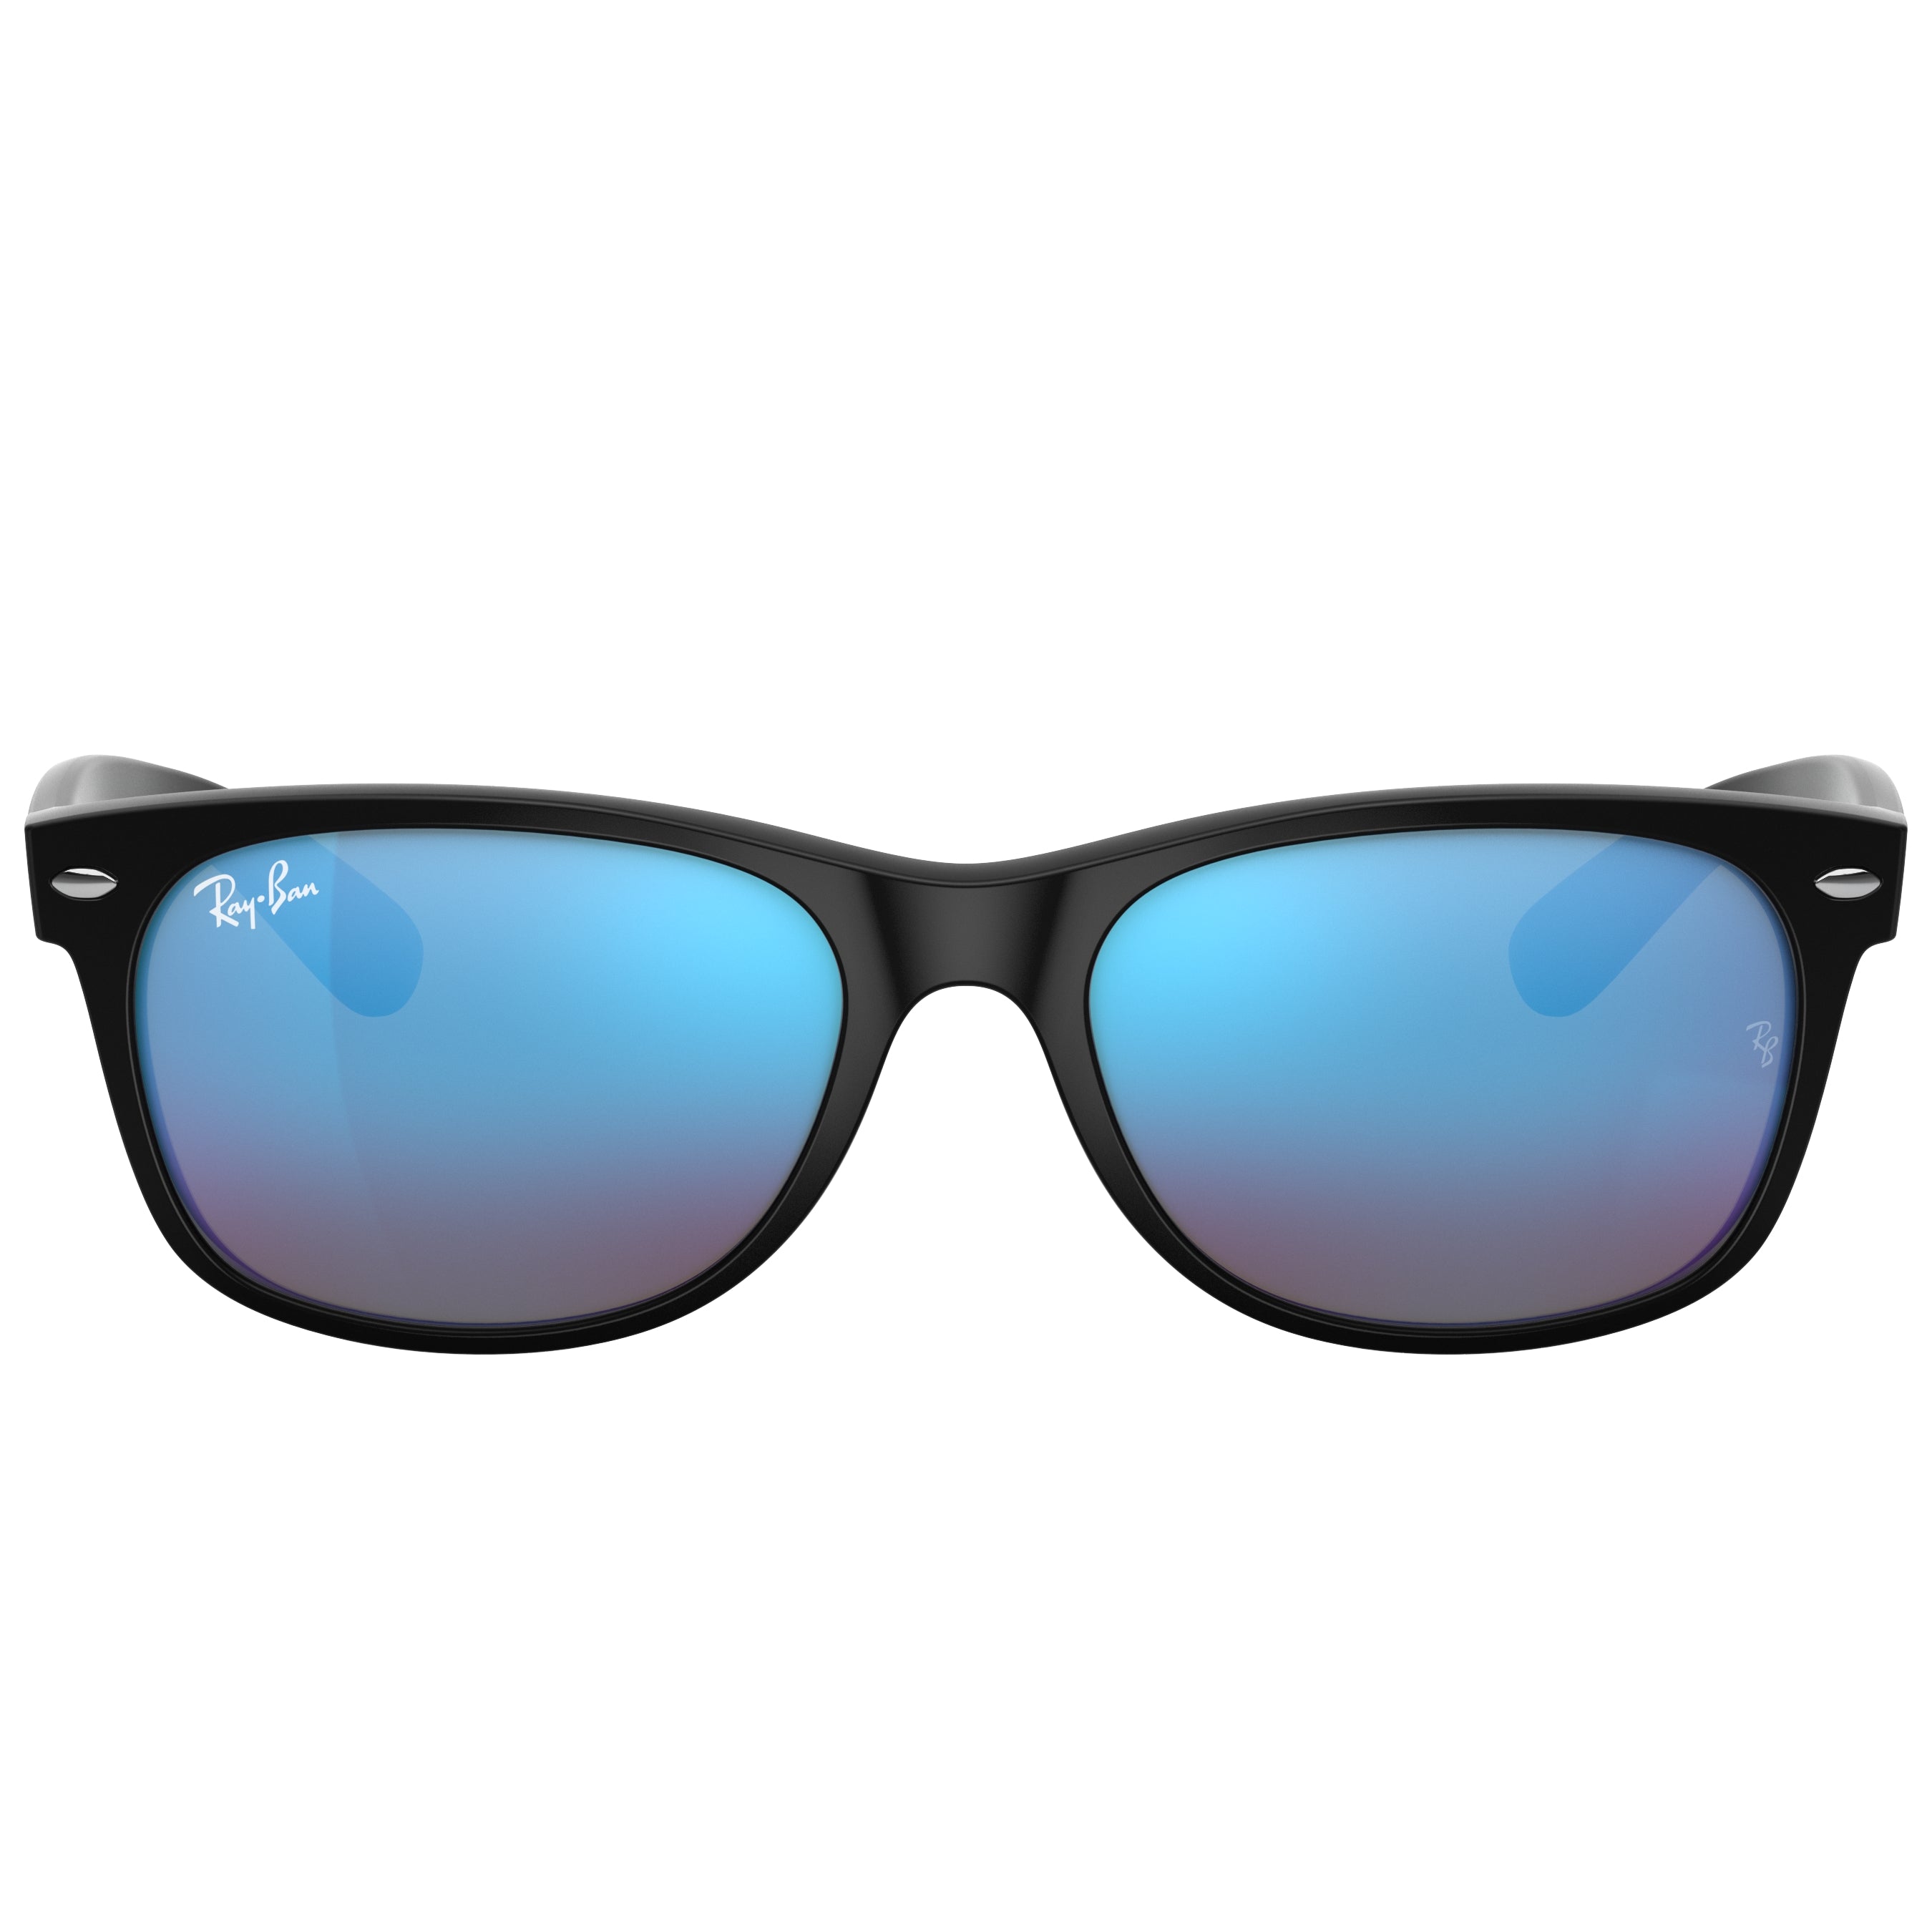 Ray-Ban Wayfarer Blue Mirrored Mirrored Wayfarer Men's Sunglasses RB2132 622/17 55